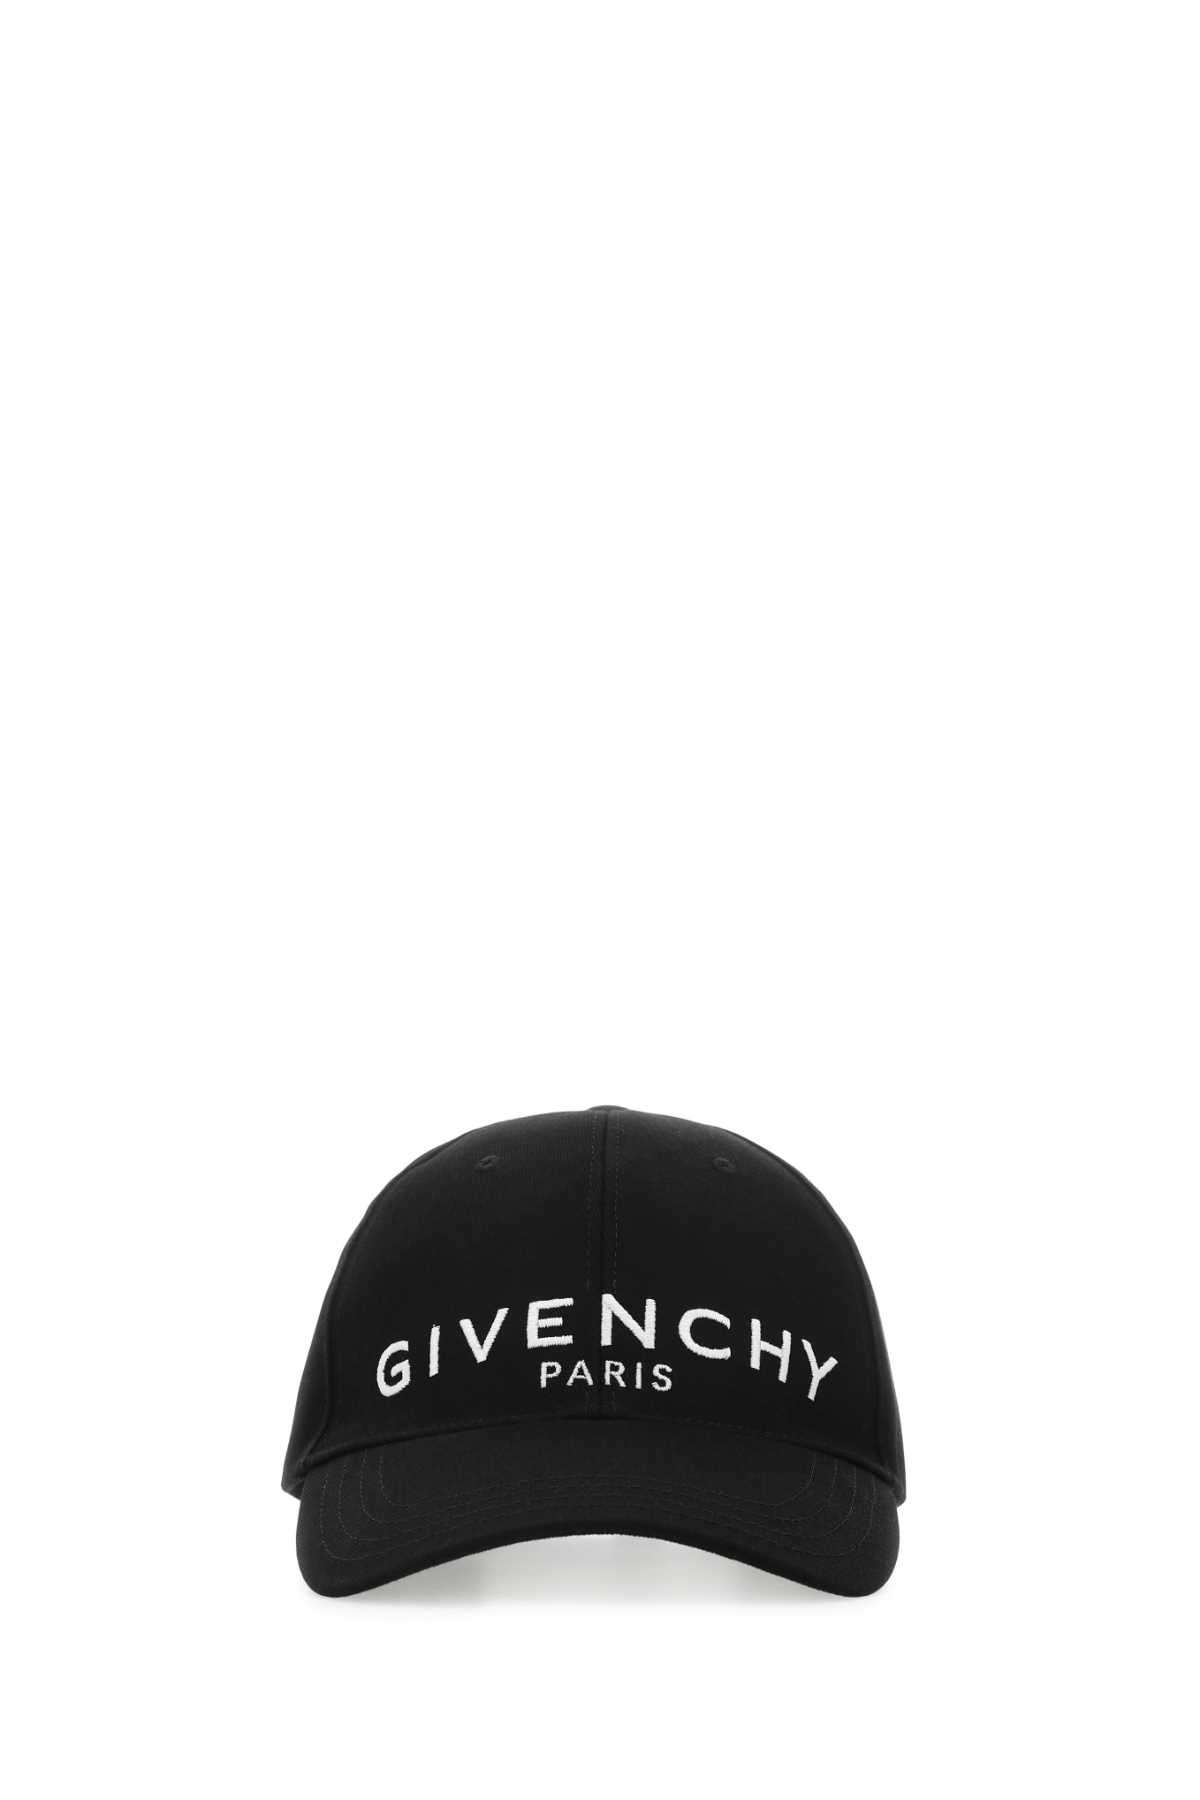 Shop Givenchy Black Cotton Blend Baseball Cap